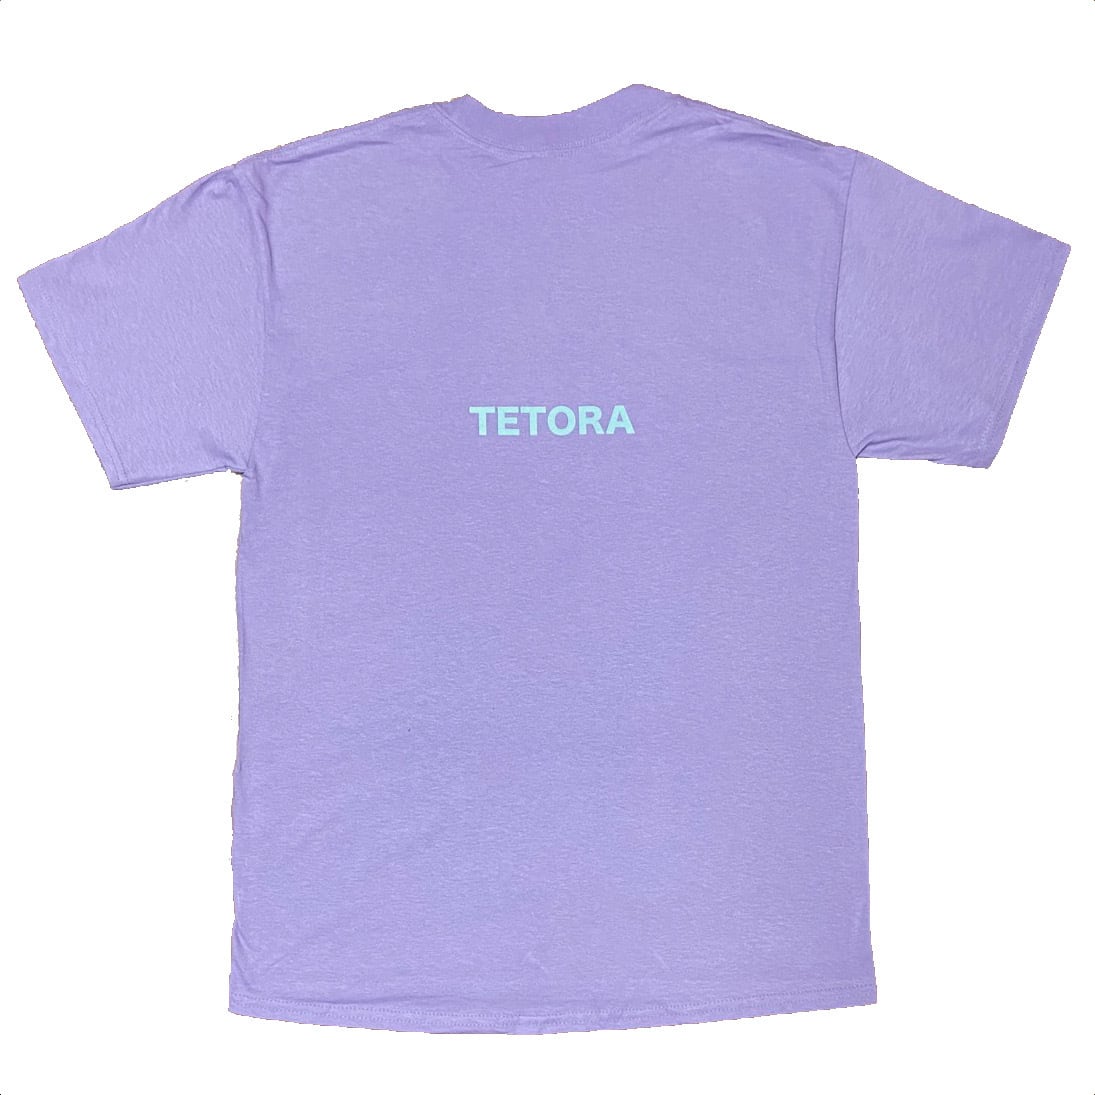 TETORA - あれからリリースツアーTee | Orange Owl Records WEB SHOP